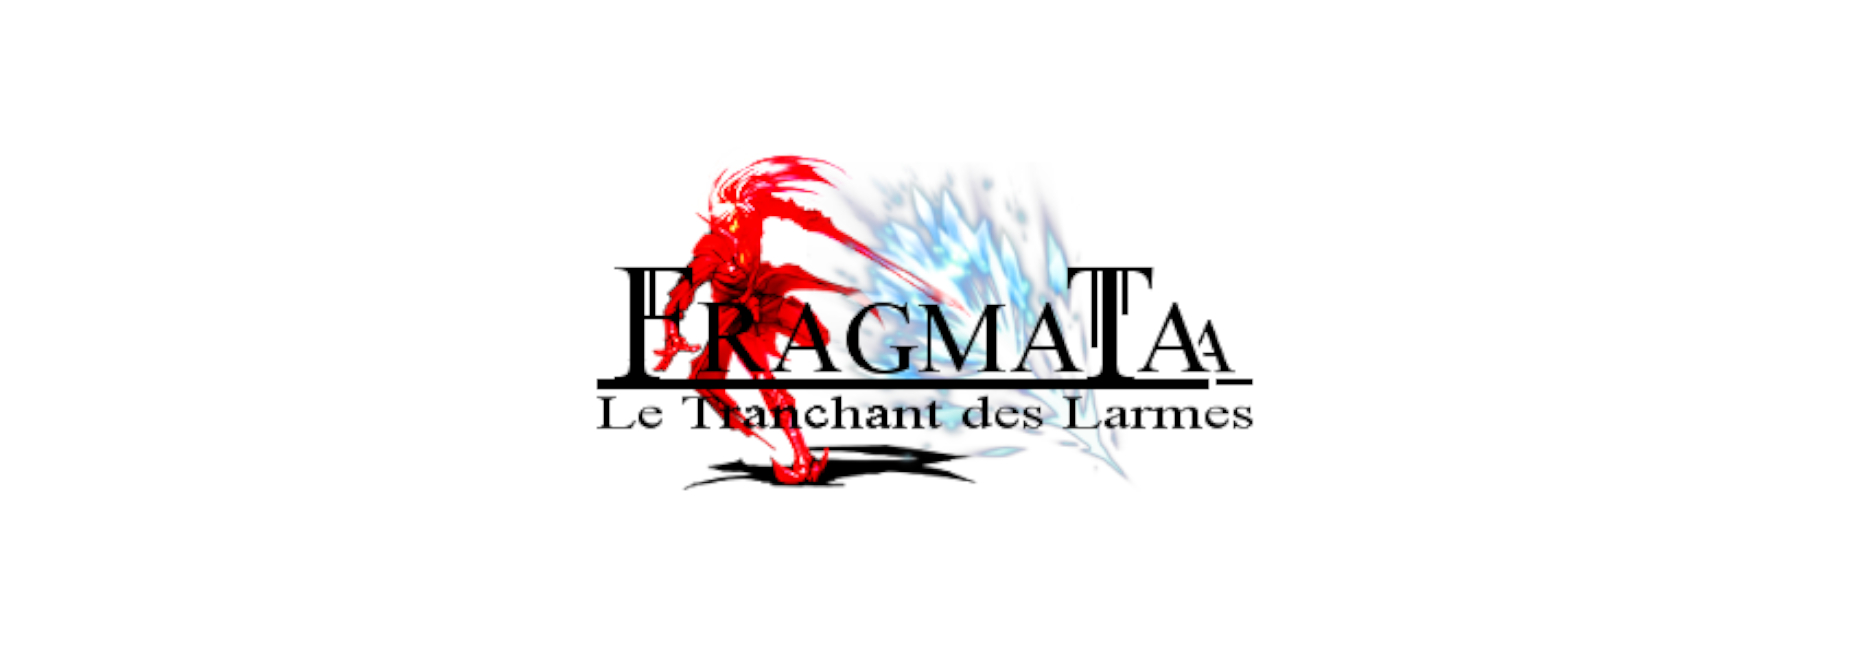 Fragmata : Le Tranchant des Larmes